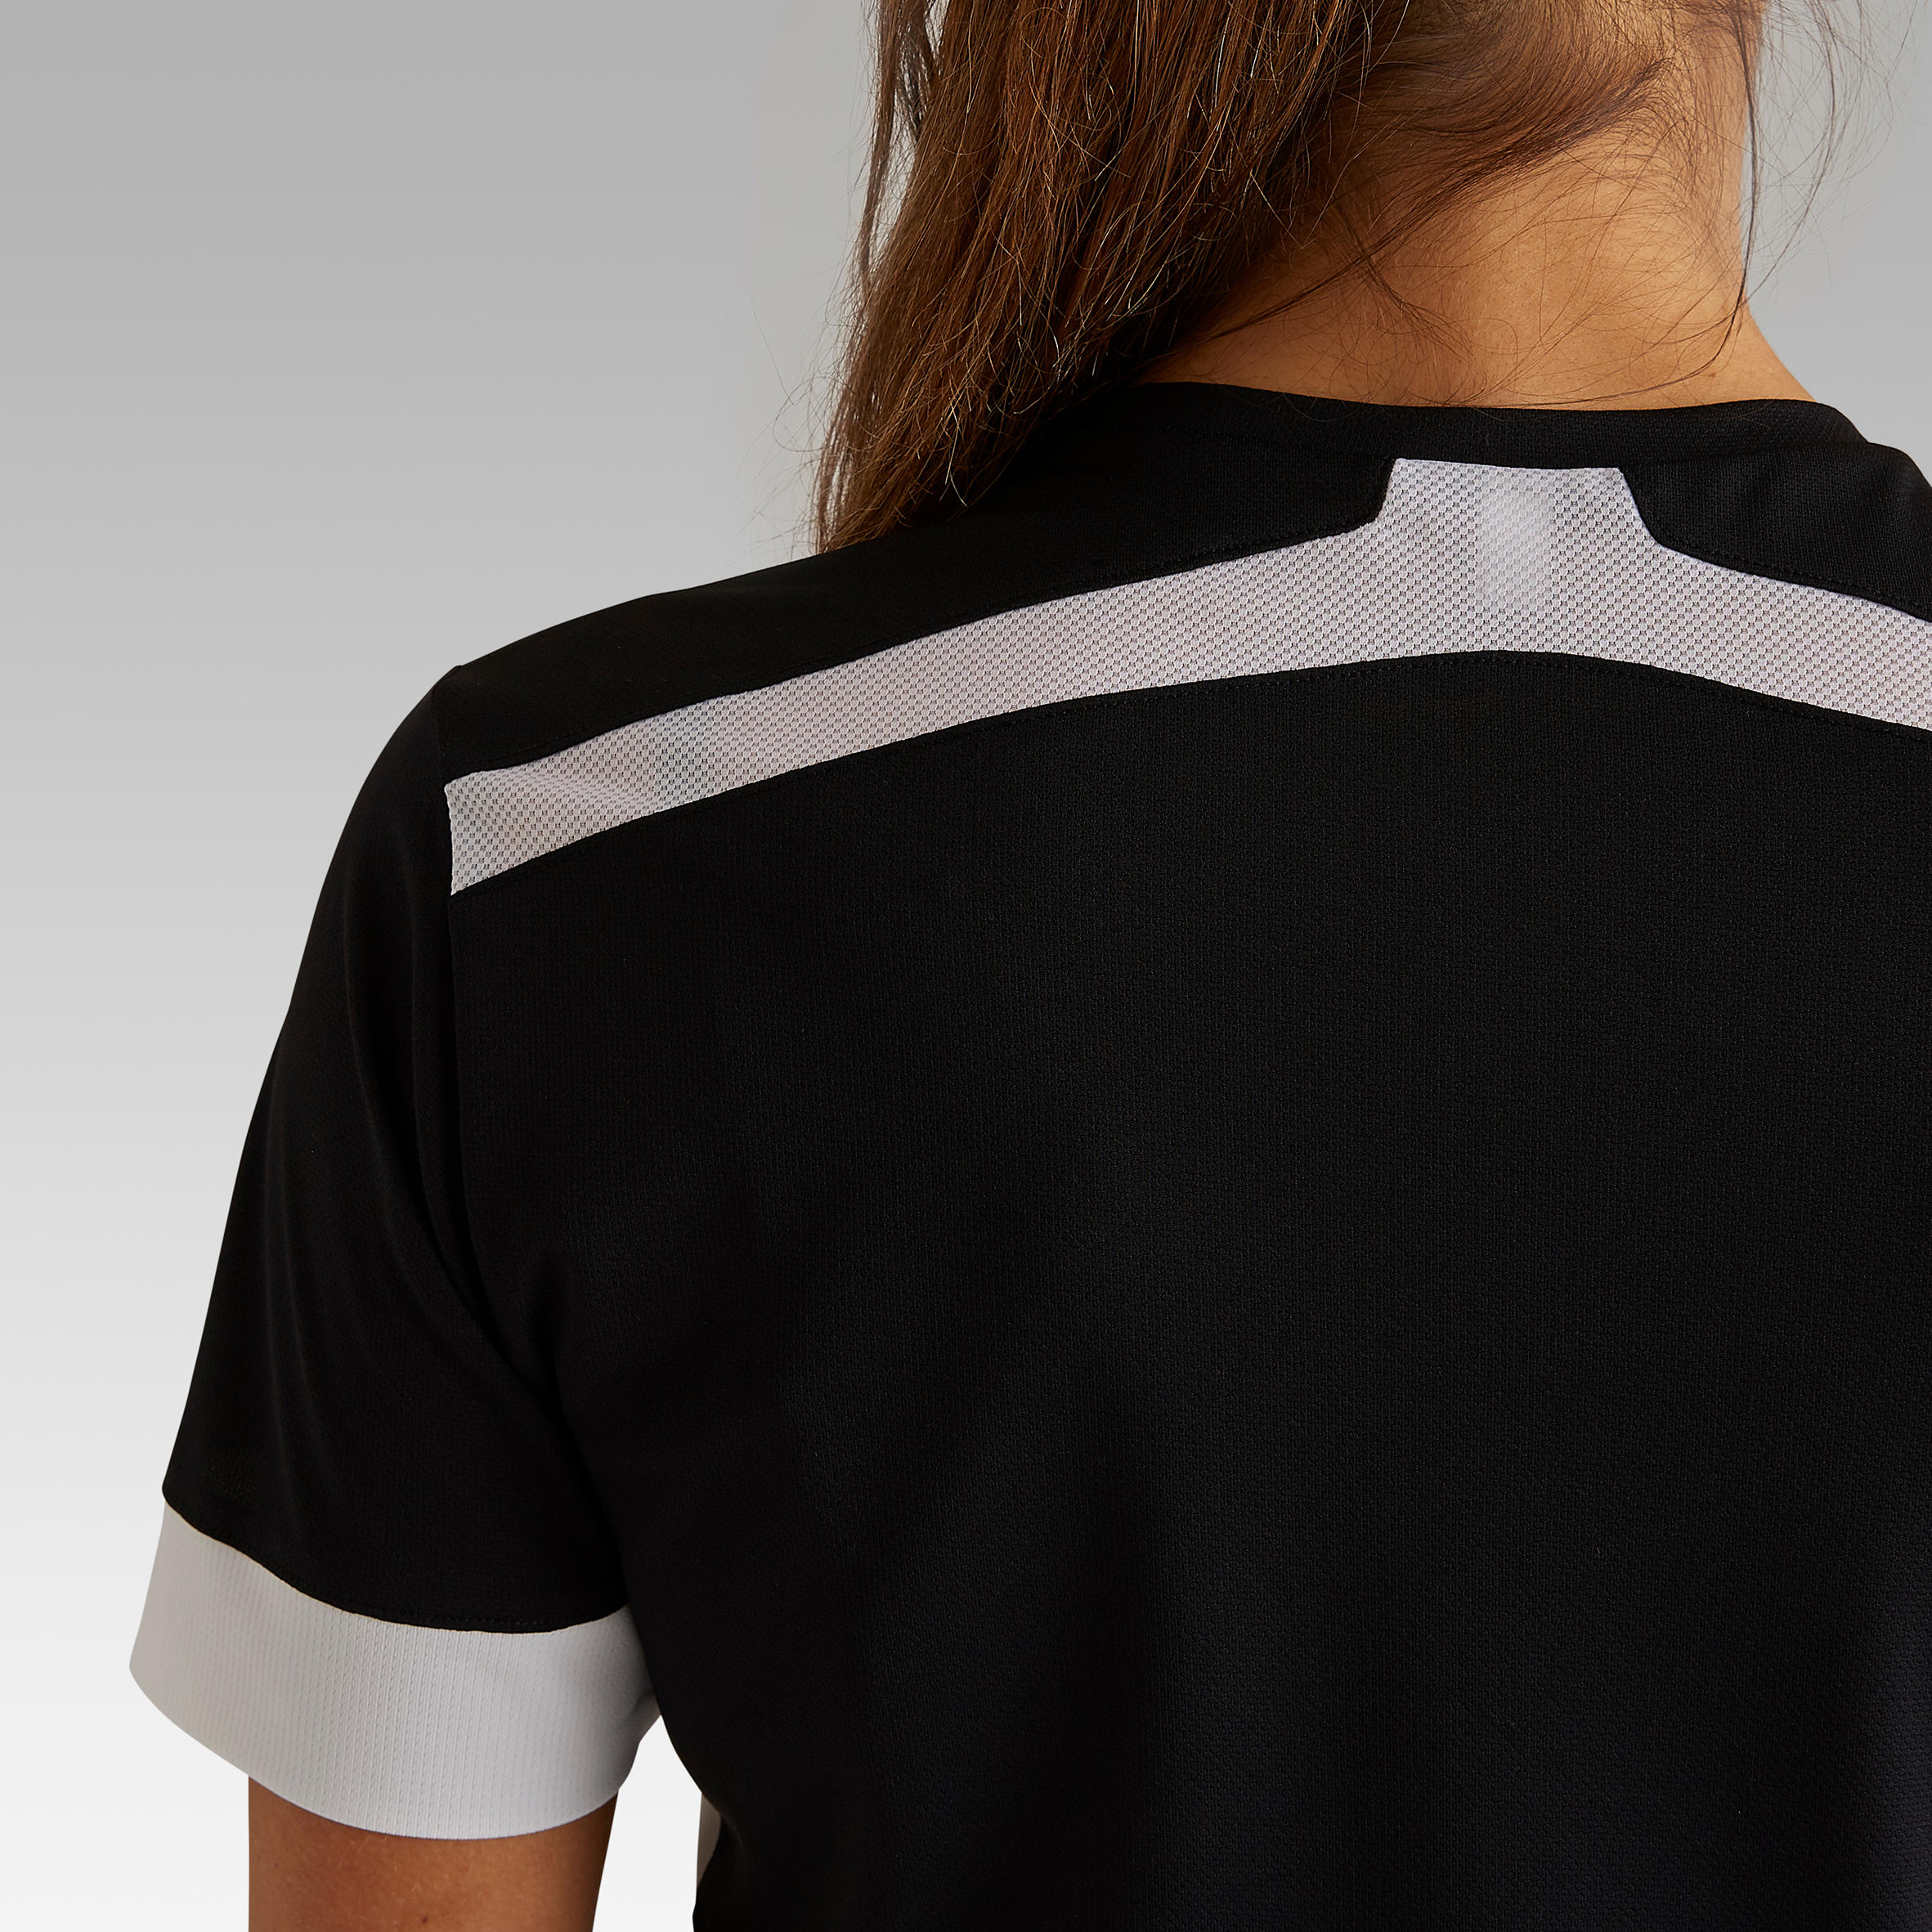 F500 Women's Football Jersey - Black/White 6/9